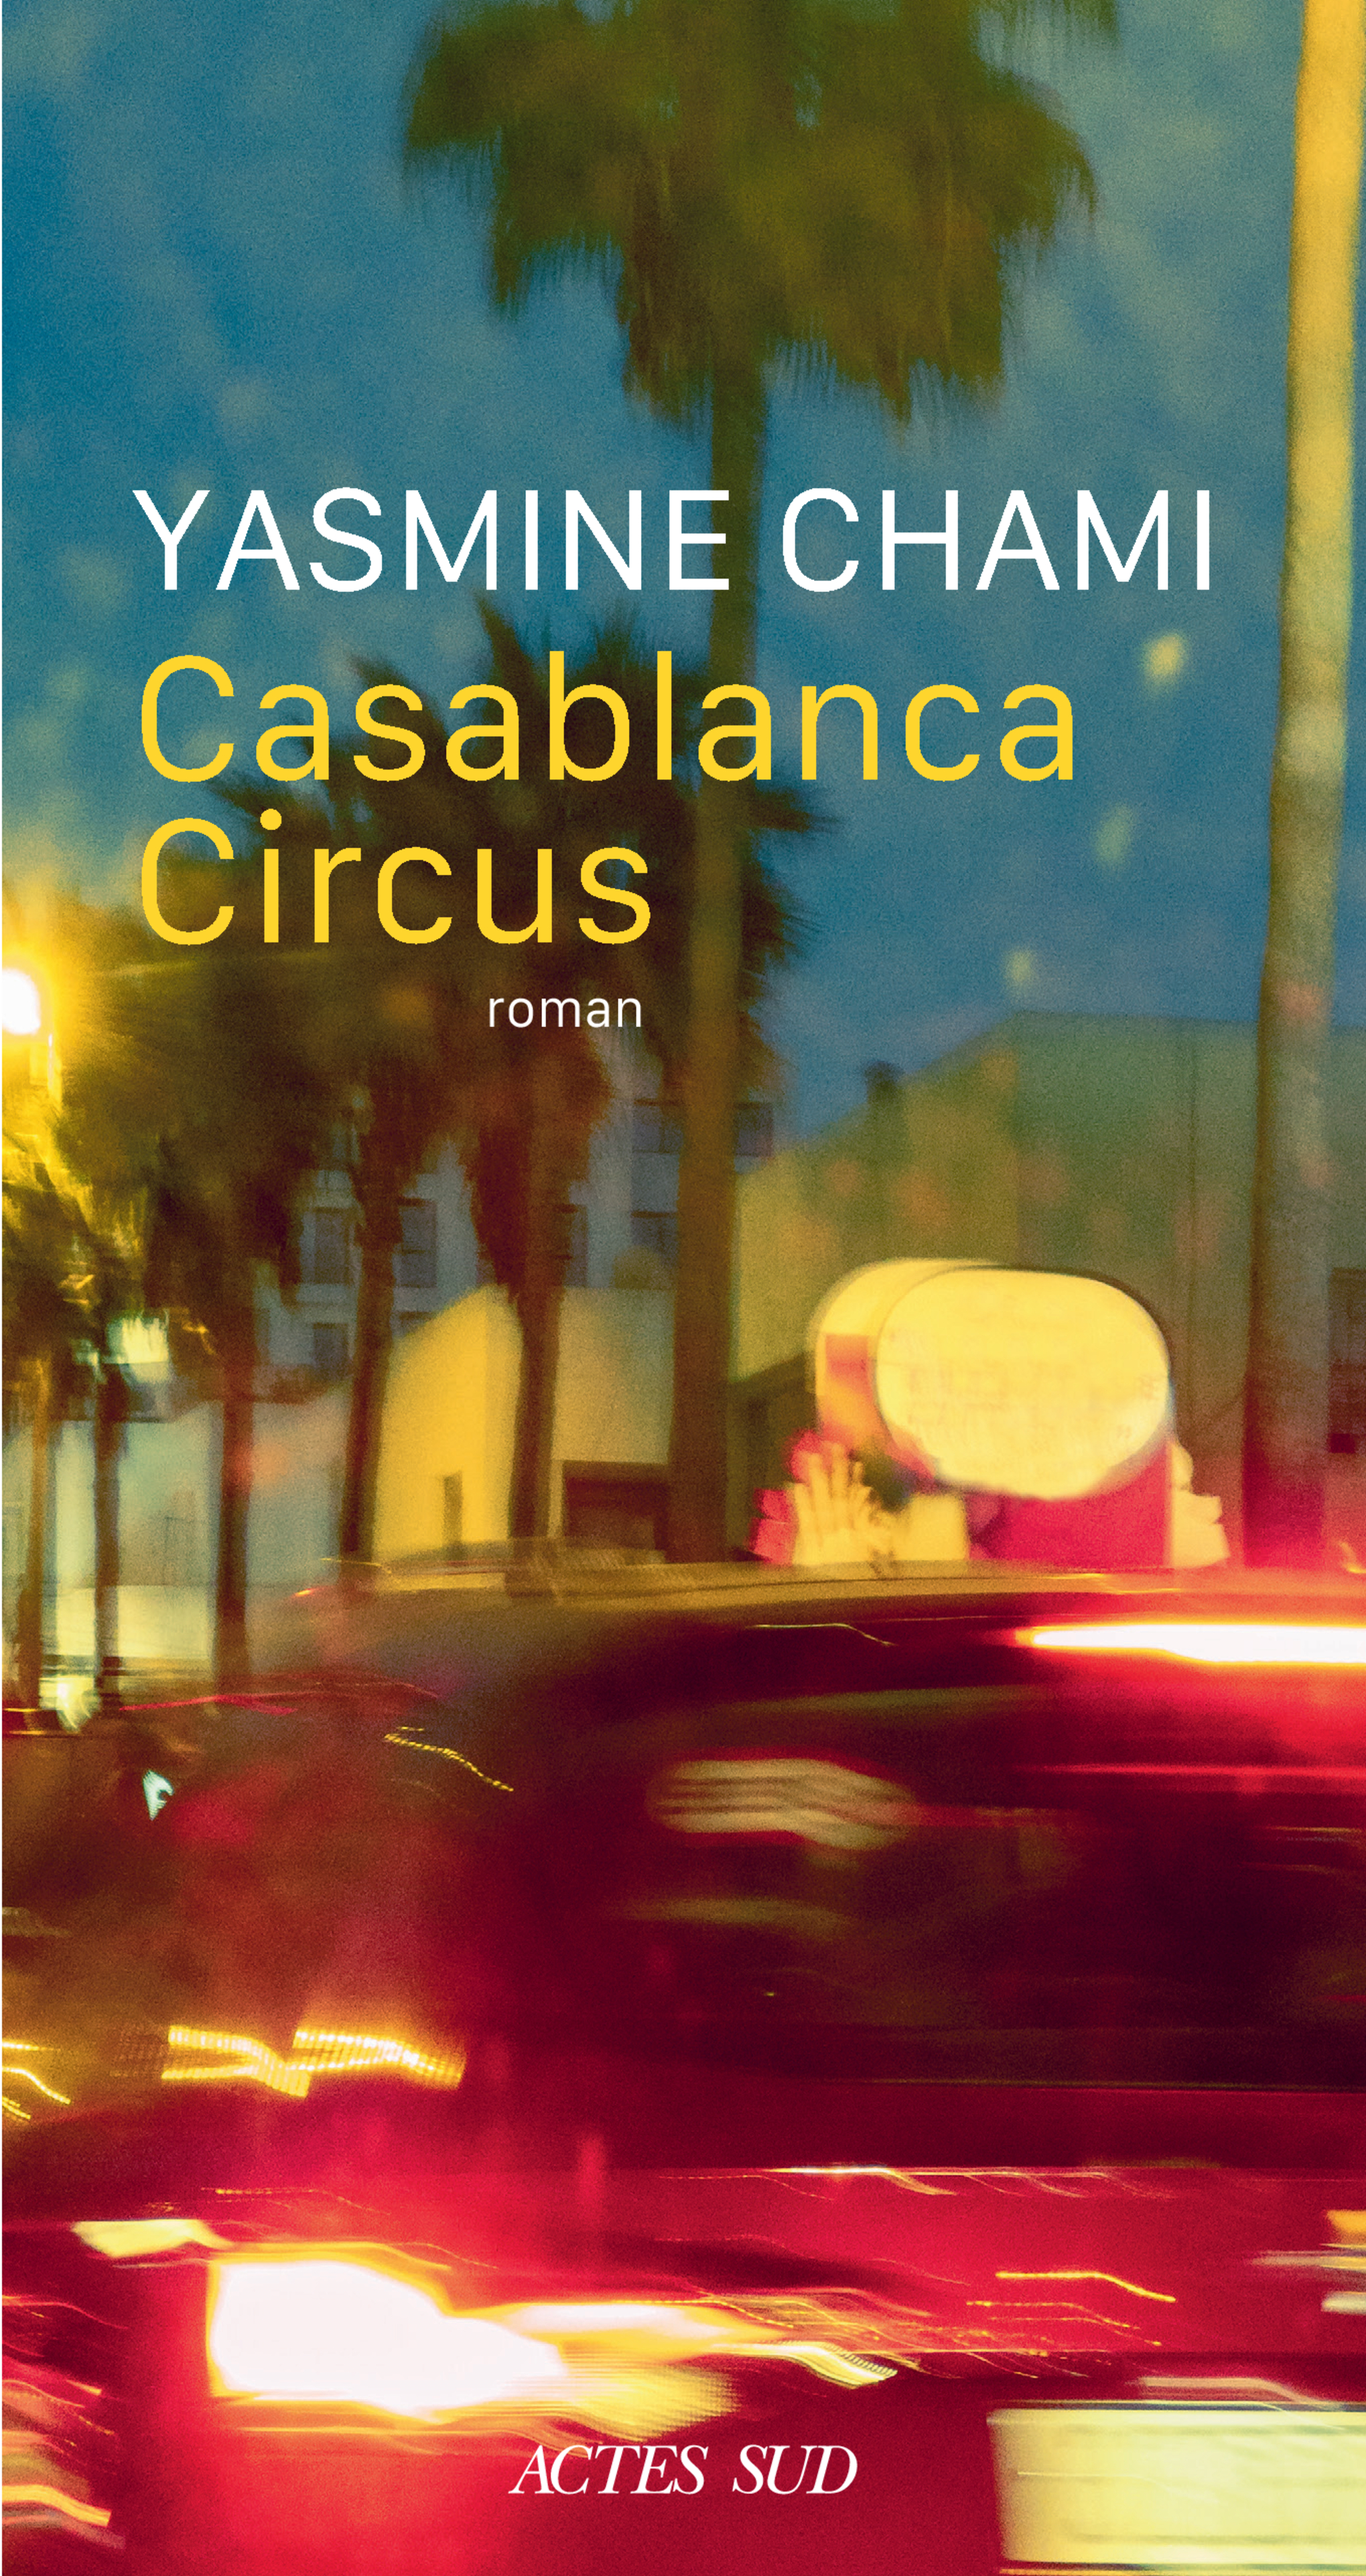 Afficher "Casablanca Circus"